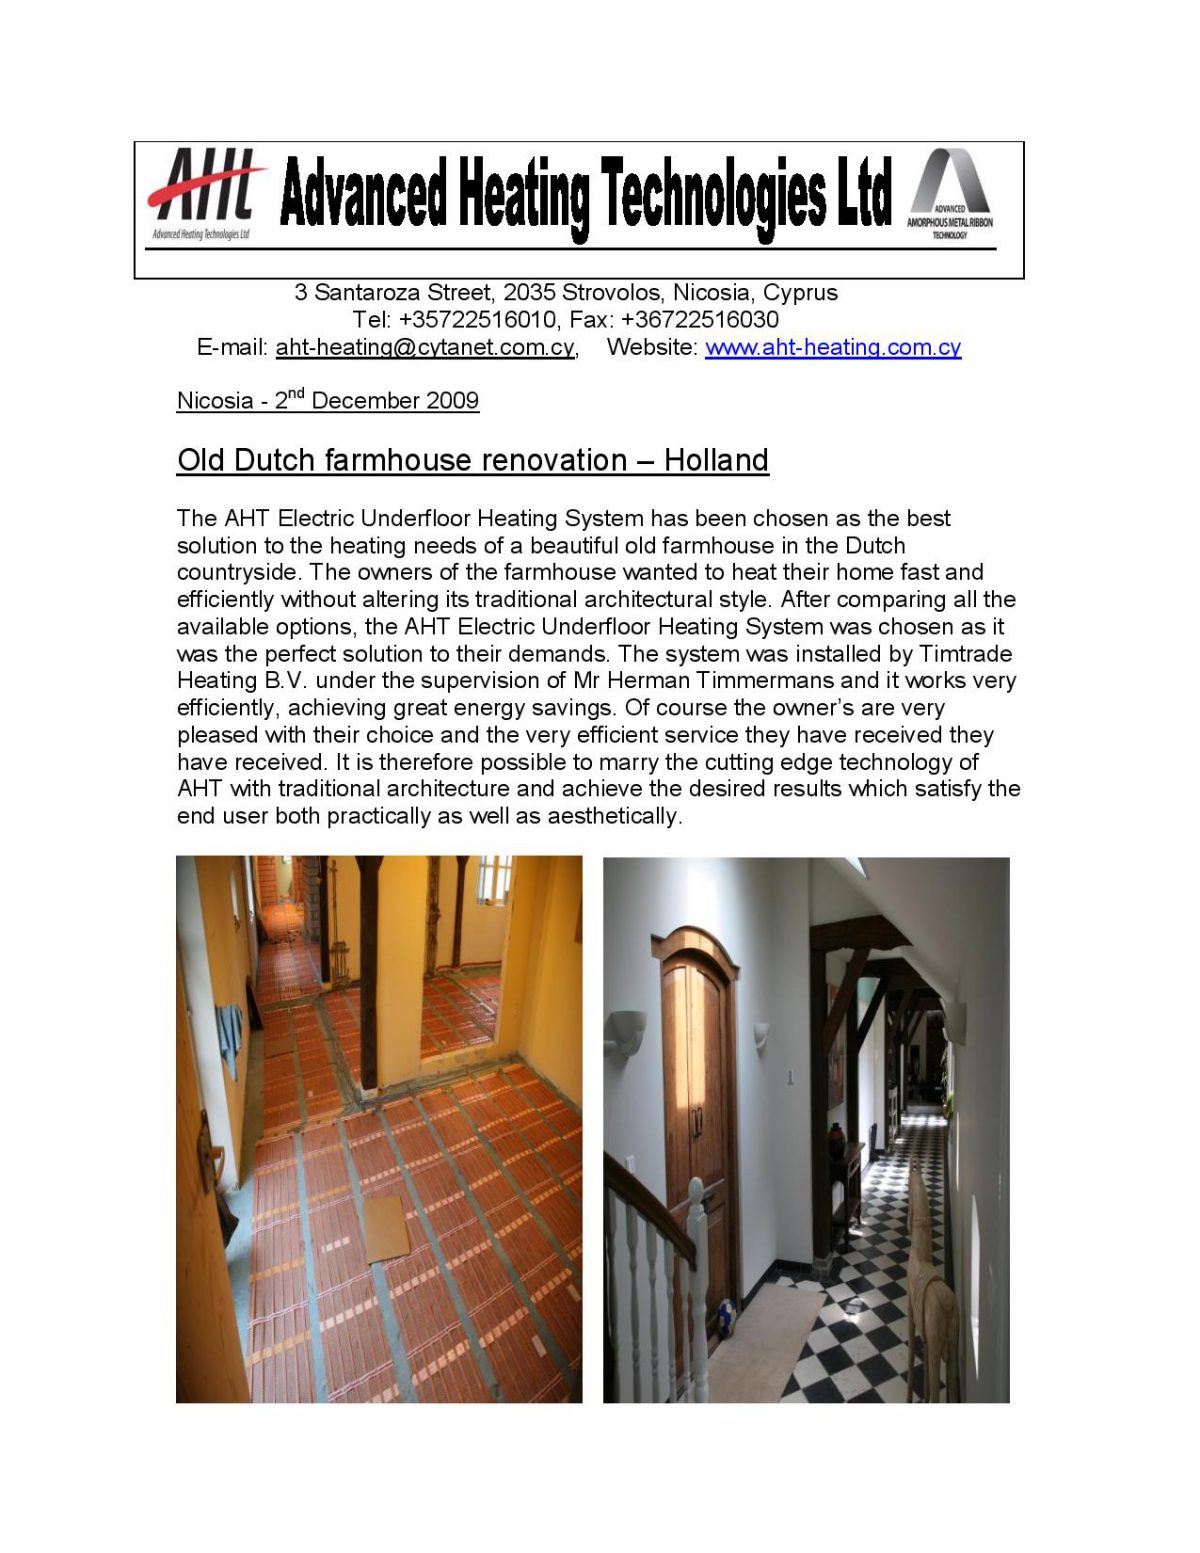 Old-Dutch-Farmhouse-Renovation-Holland-page-001-1200x1553